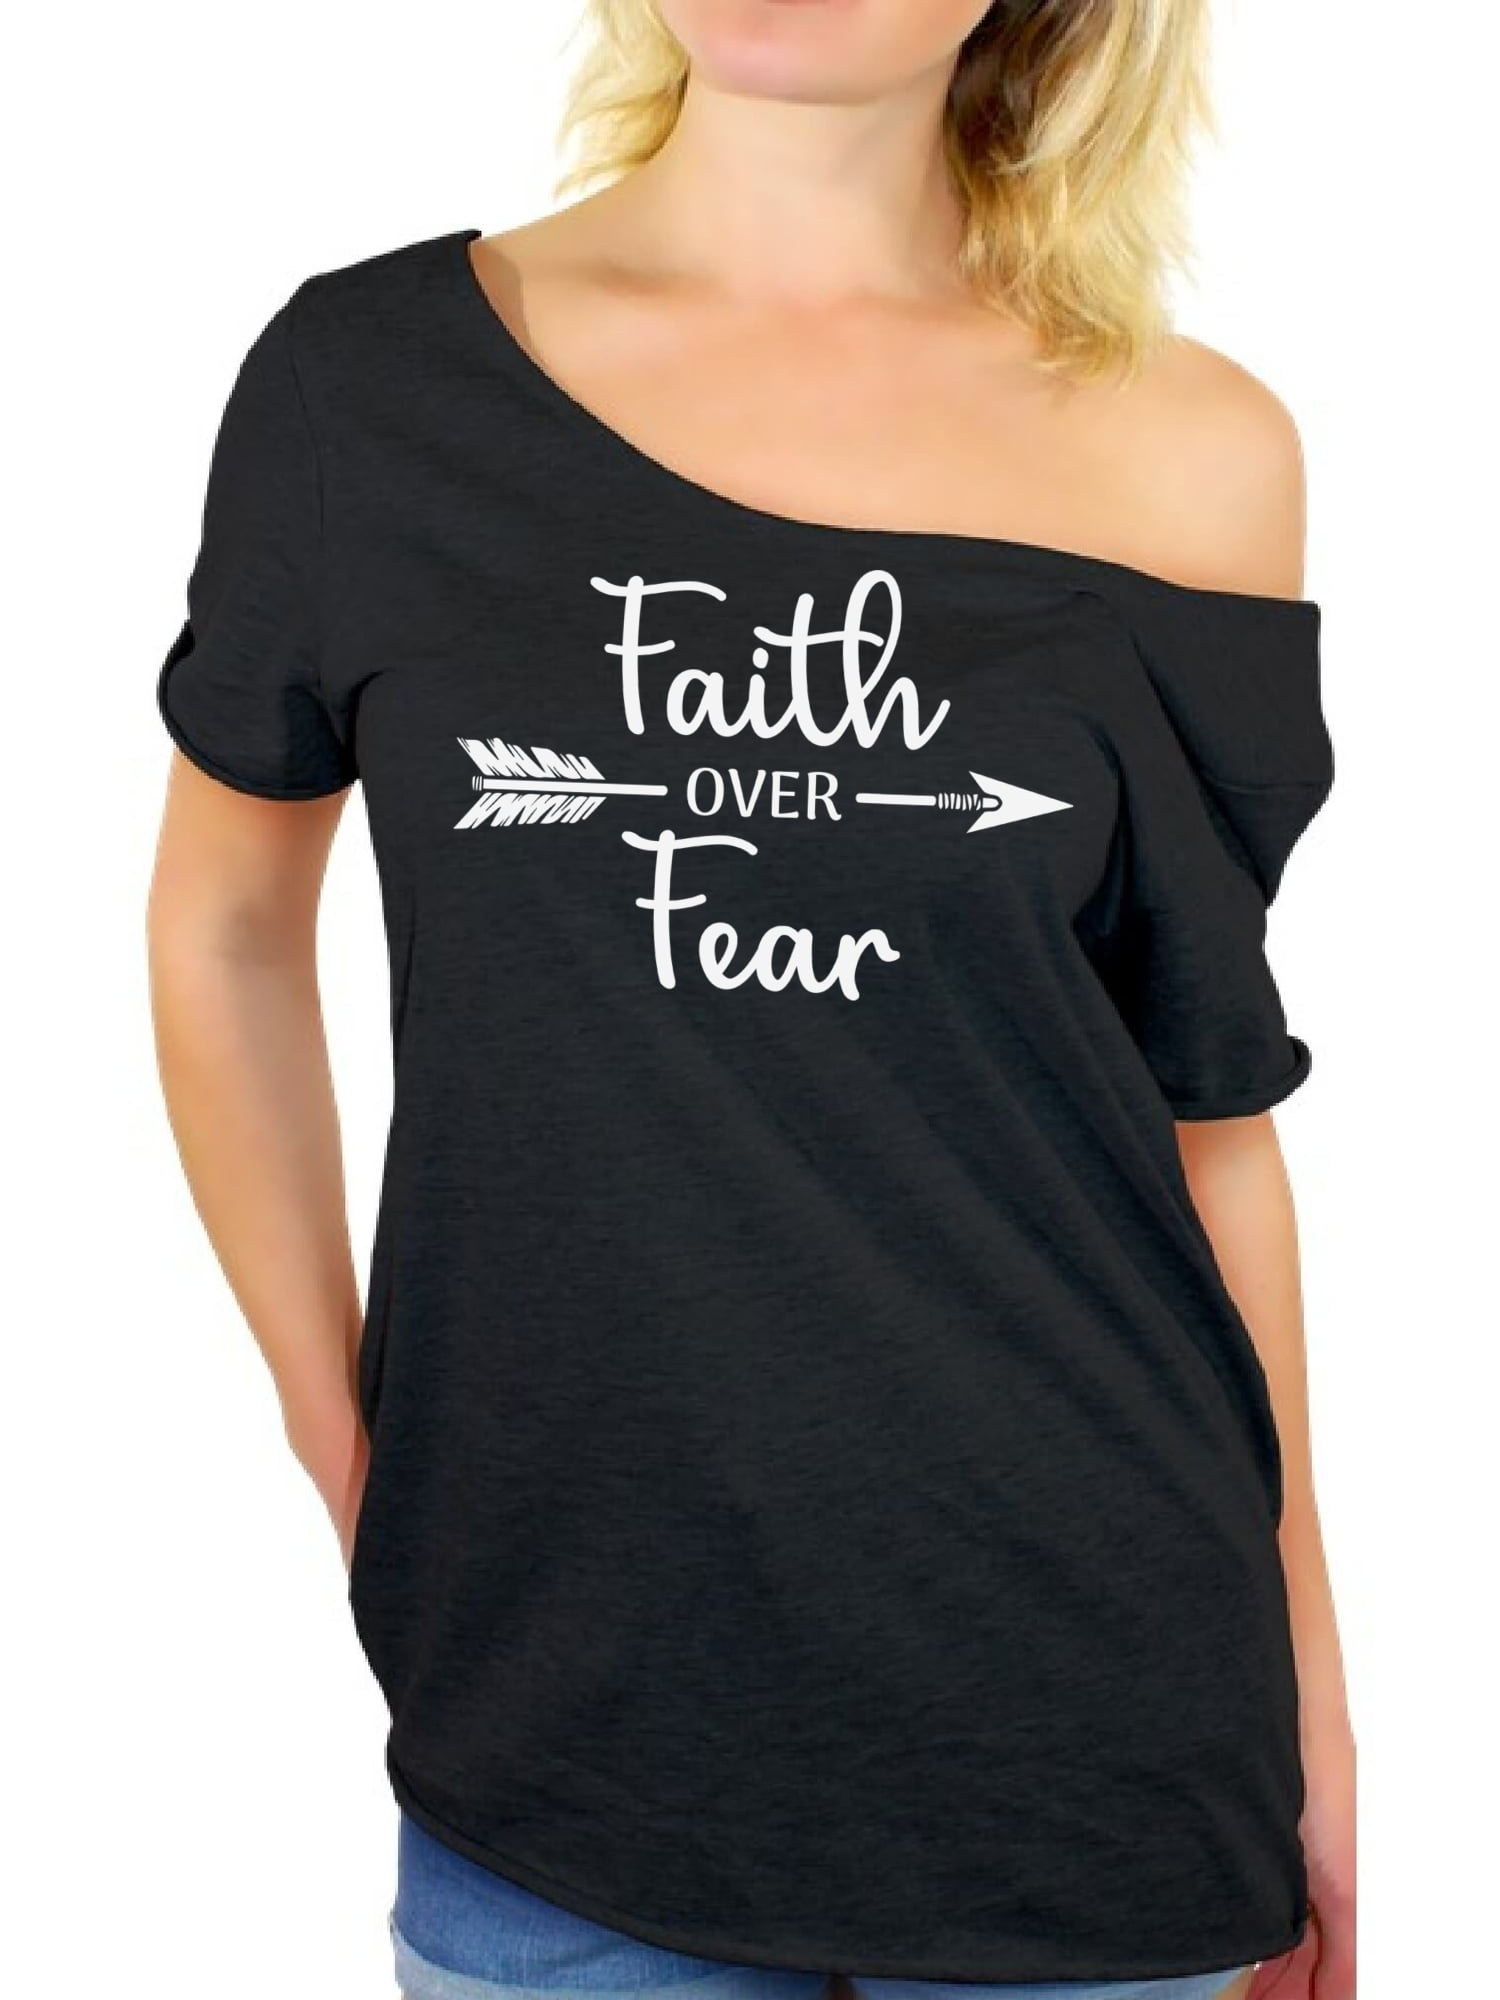 Women Butterfly Graphic Shirt Cute Christian Shirt Inspirational Top Religious Short Sleeve Tee